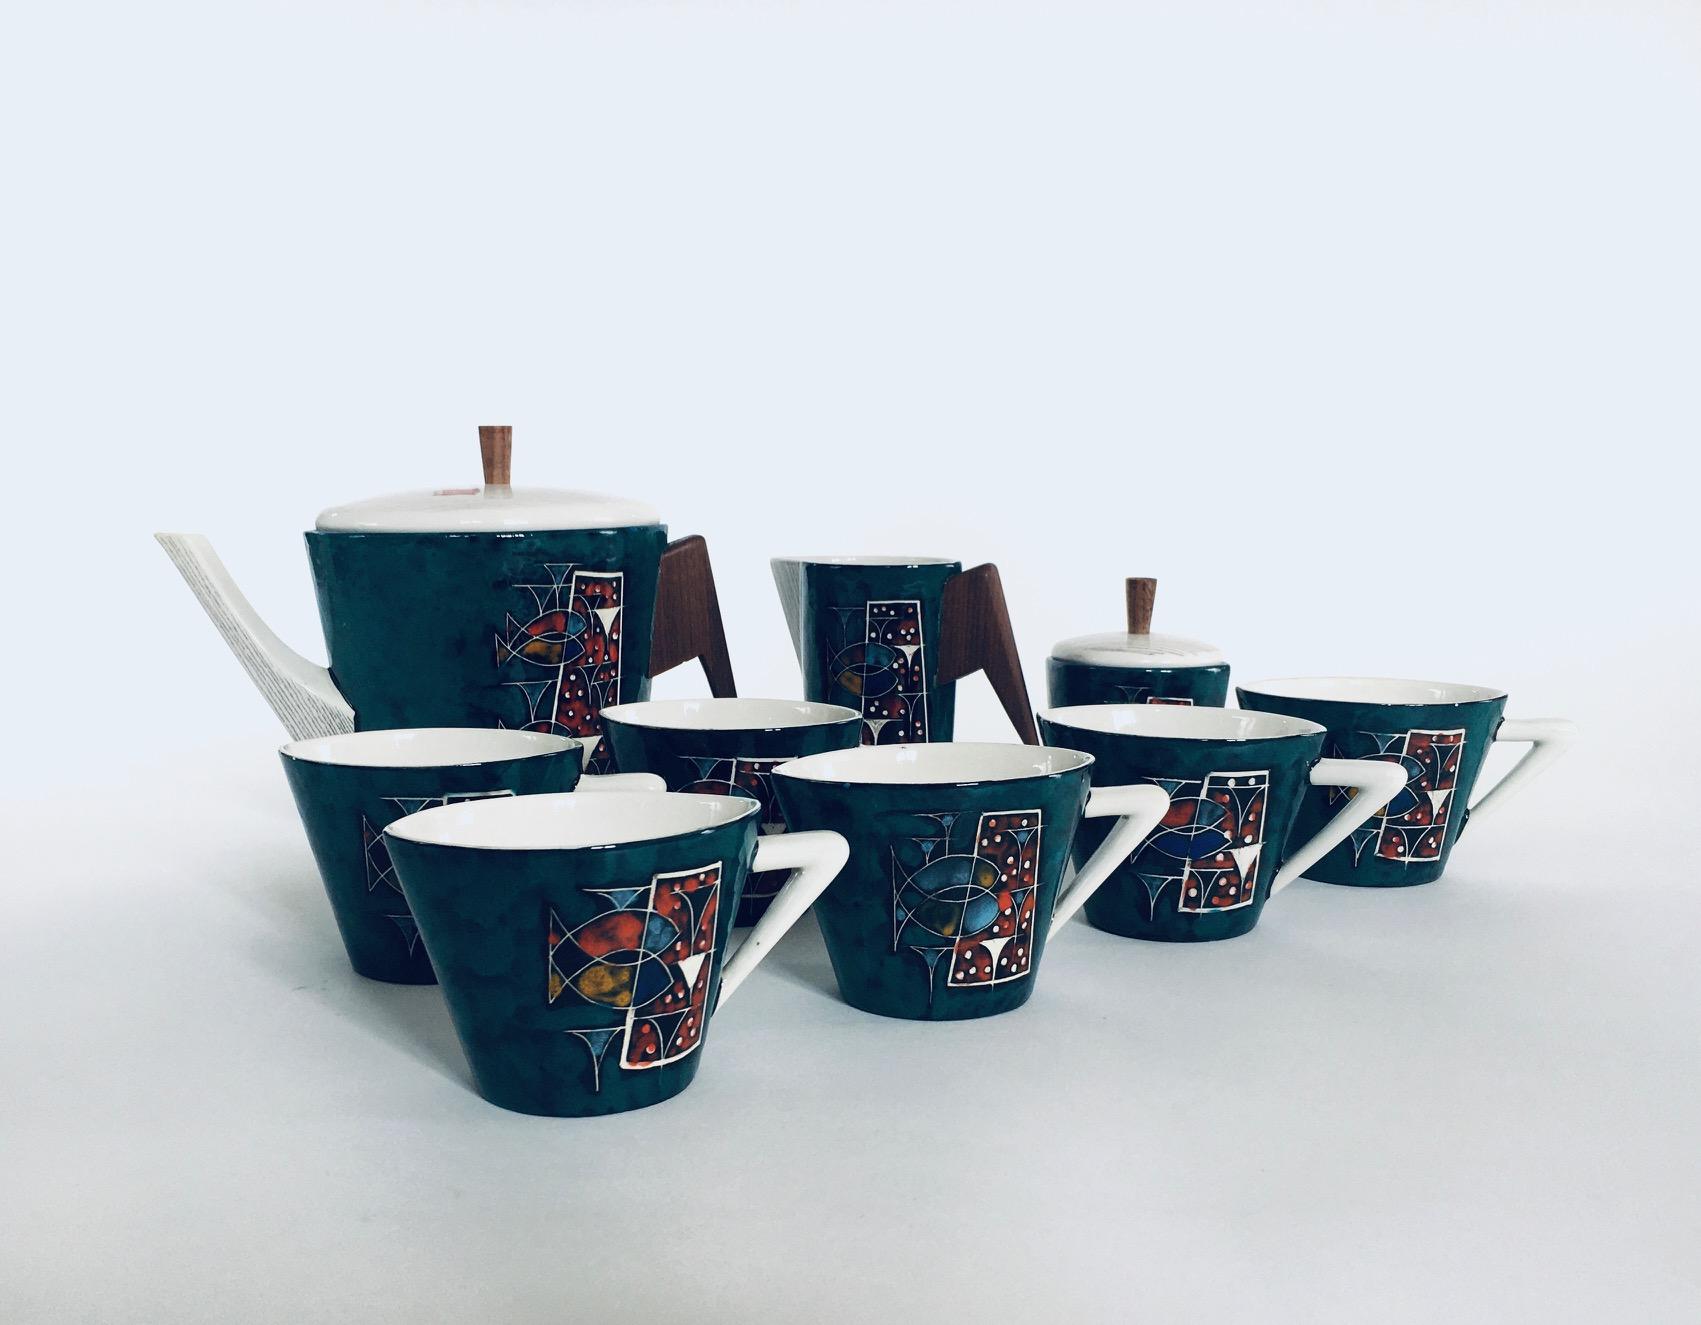 Italian Midcentury Modern Art Ceramic Tea or Coffee Service Set by CEMAS, Italy 1950's For Sale